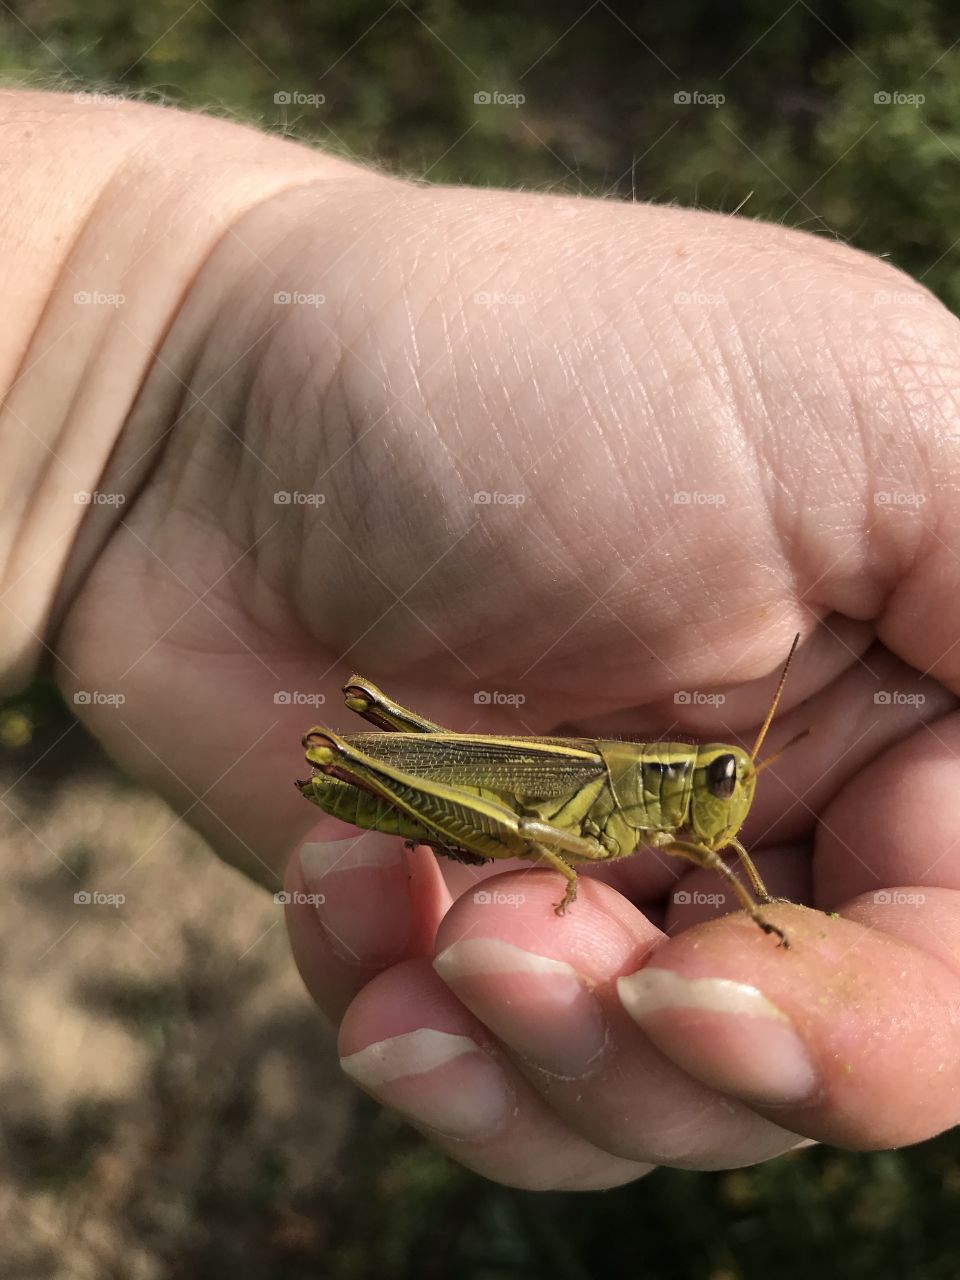 A grasshopper in the hand...